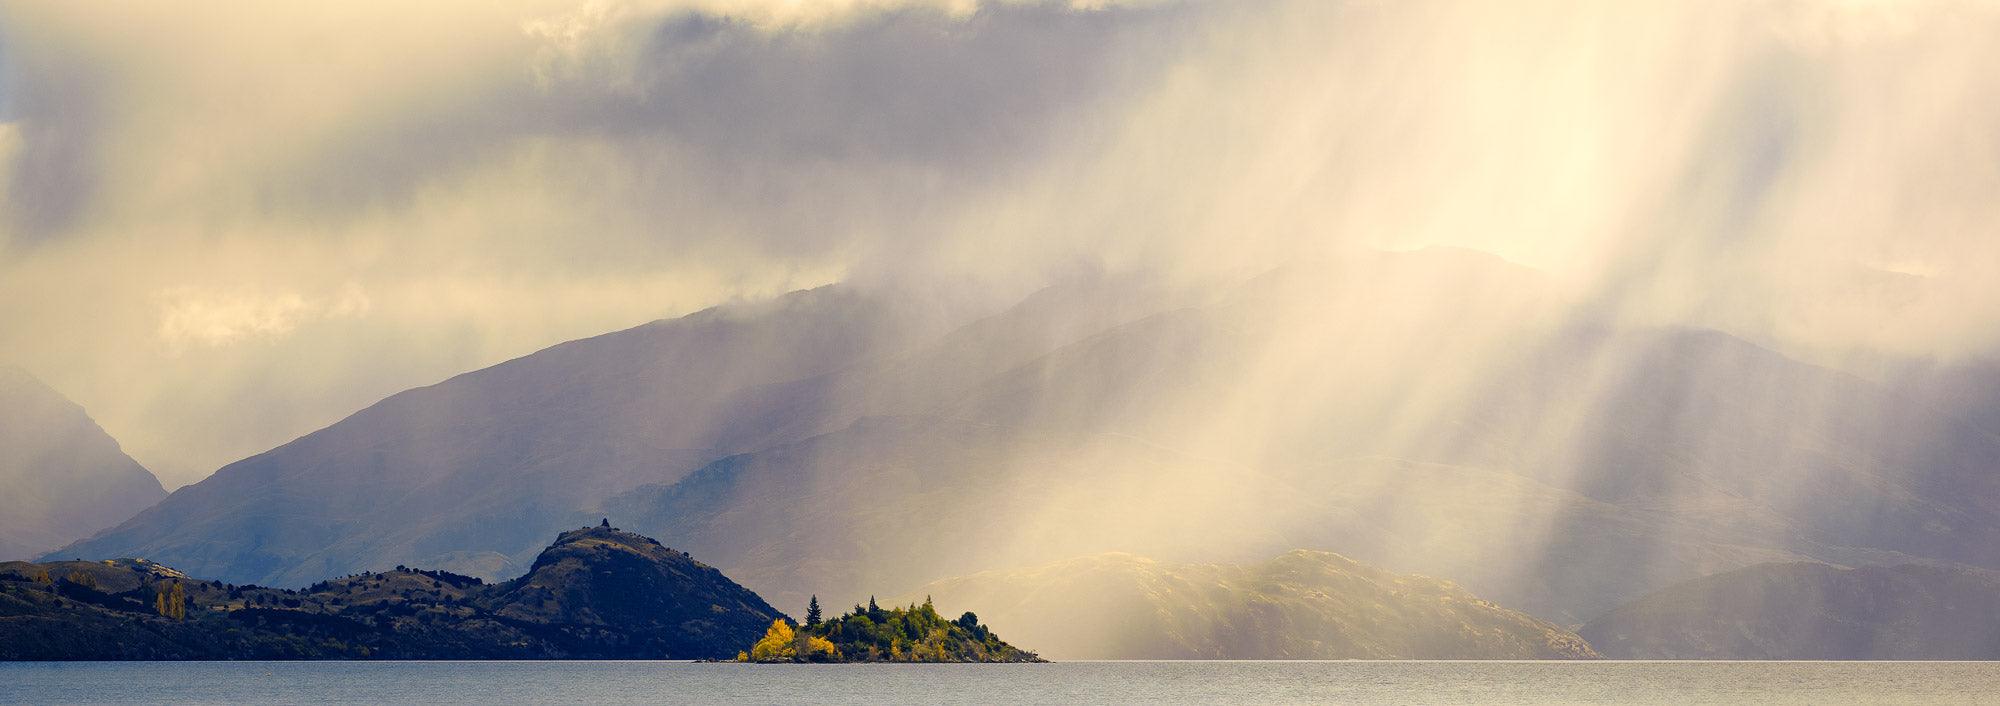 Aspiring Storm - Lake Wanaka - by Award Winning New Zealand Landscape Photographer Stephen Milner